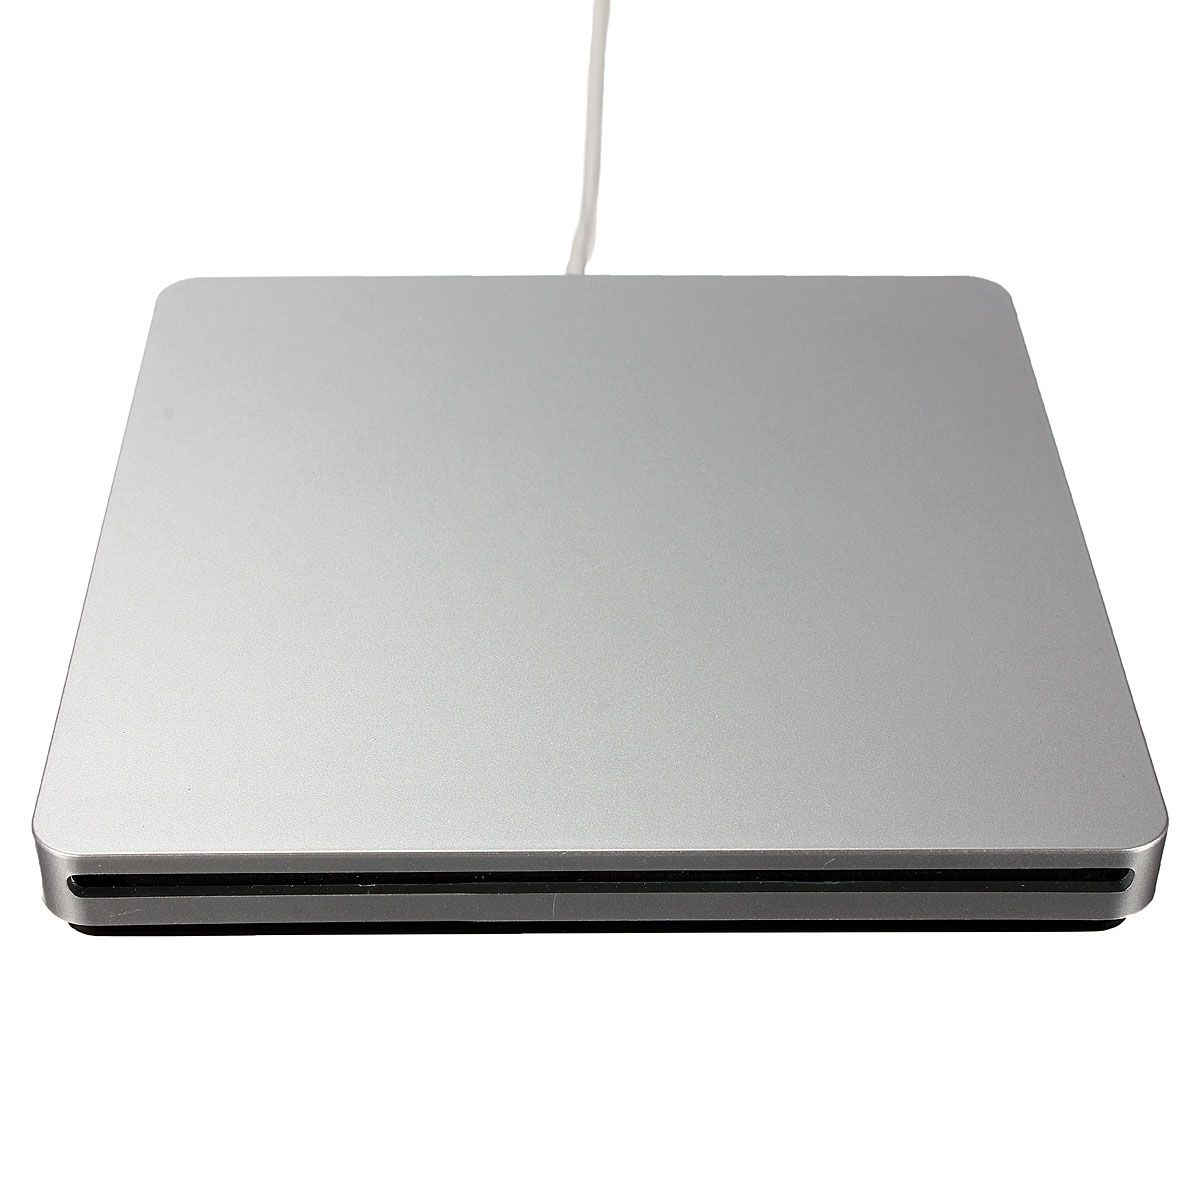 External-Slot-in-USB-DVD-CD-RW-Driver-DVD-Burner-Optical-Drive-for-Macbook-946776